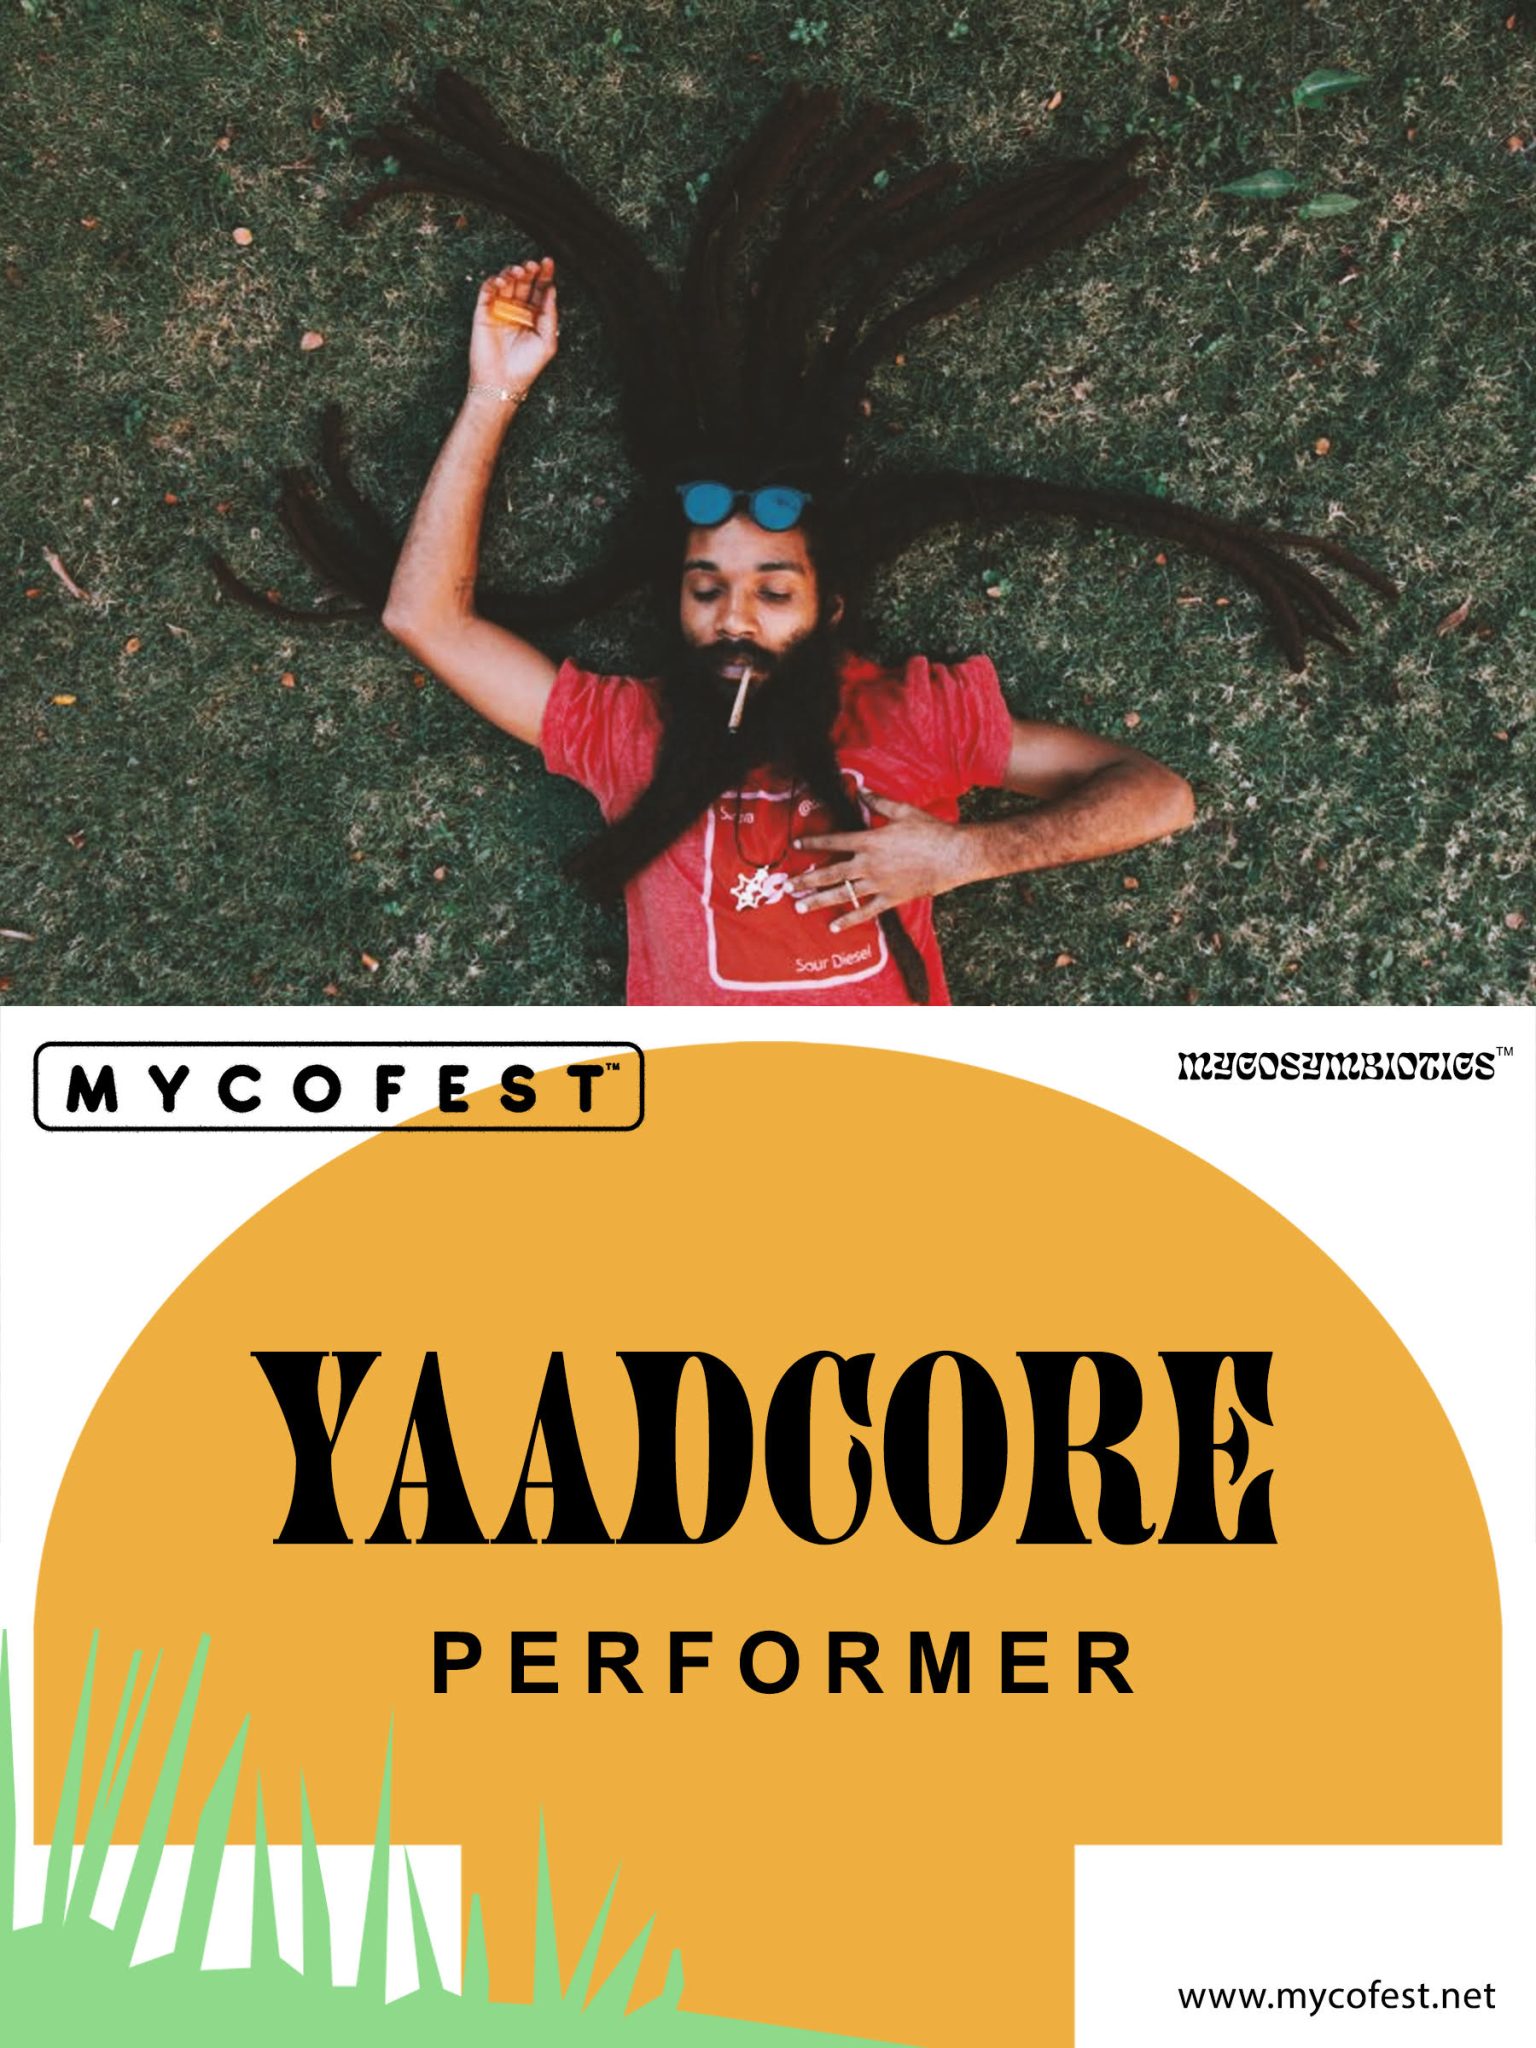 yaadcore Earthdance artist at mycofest